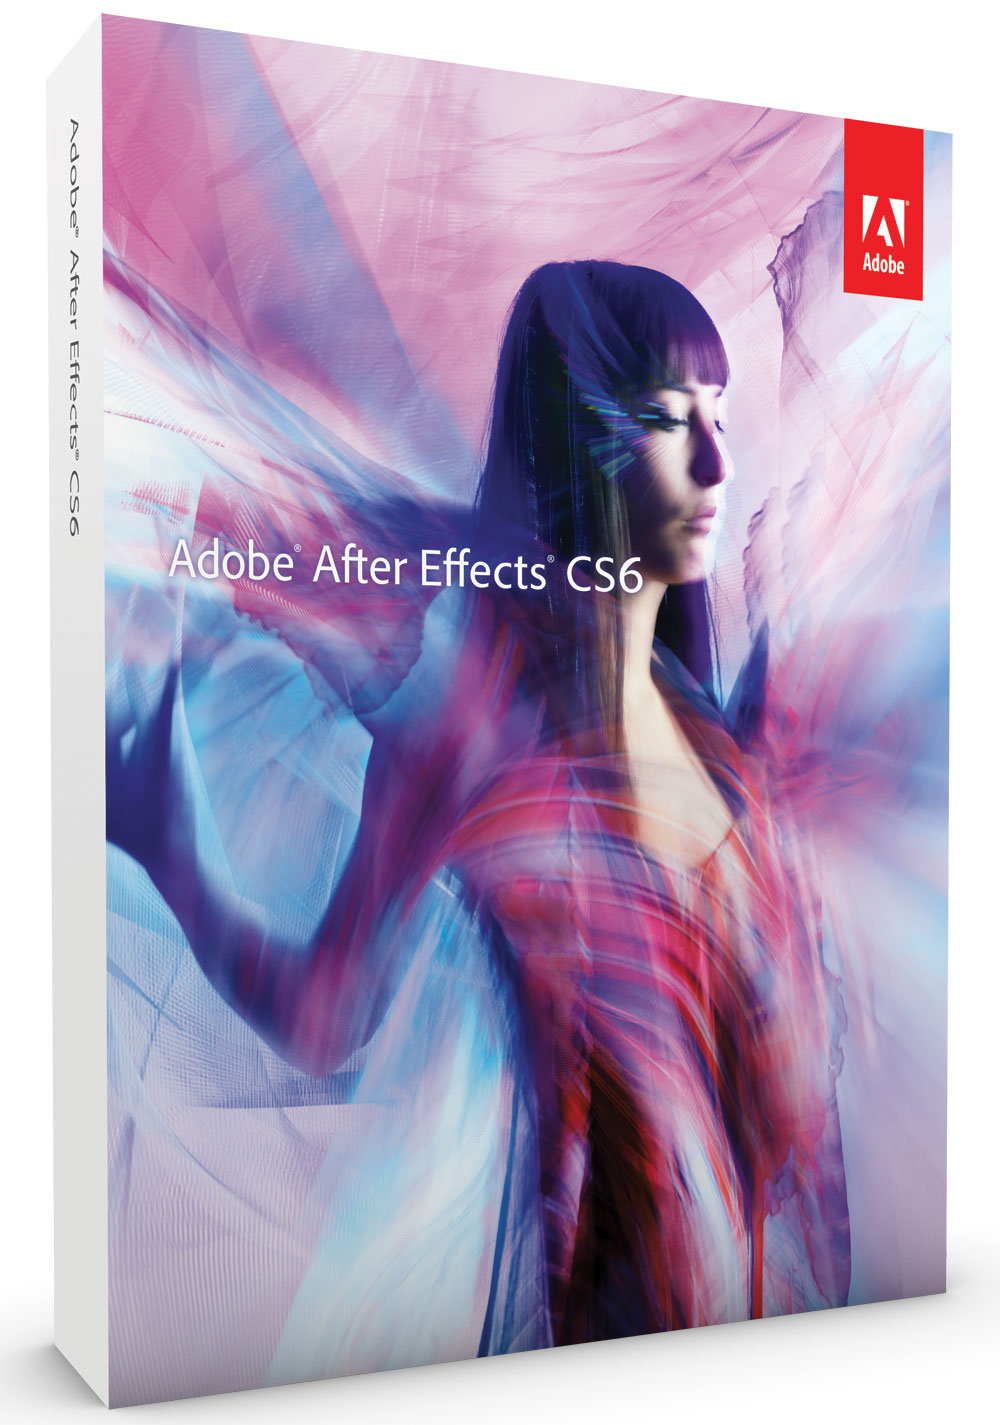 Adobe After Effects 2020 (17.6.0.46) Portable .rar